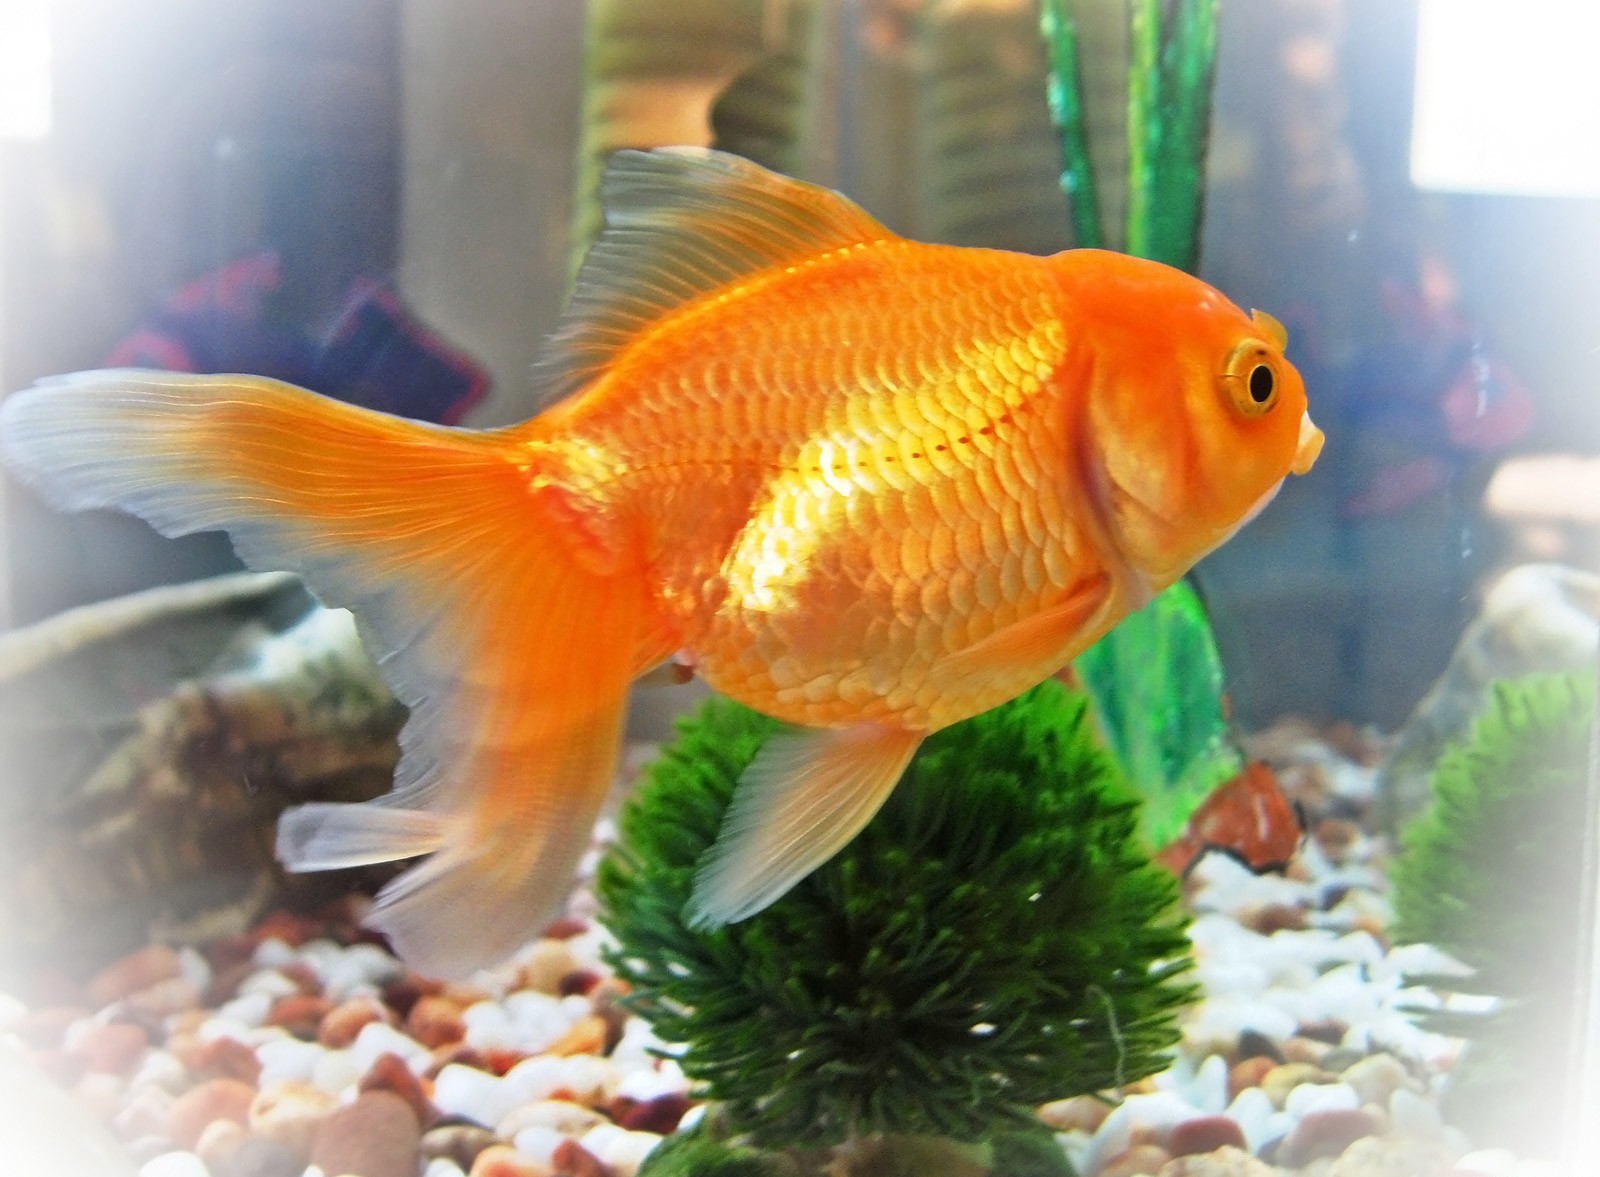 Аквариумная рыба золотая рыбка. Золотушка рыбка аквариумная. Золотой рибка аквариум. Золотая рыбка большая аквариумная. Золотая рыбка вуалий хвост.